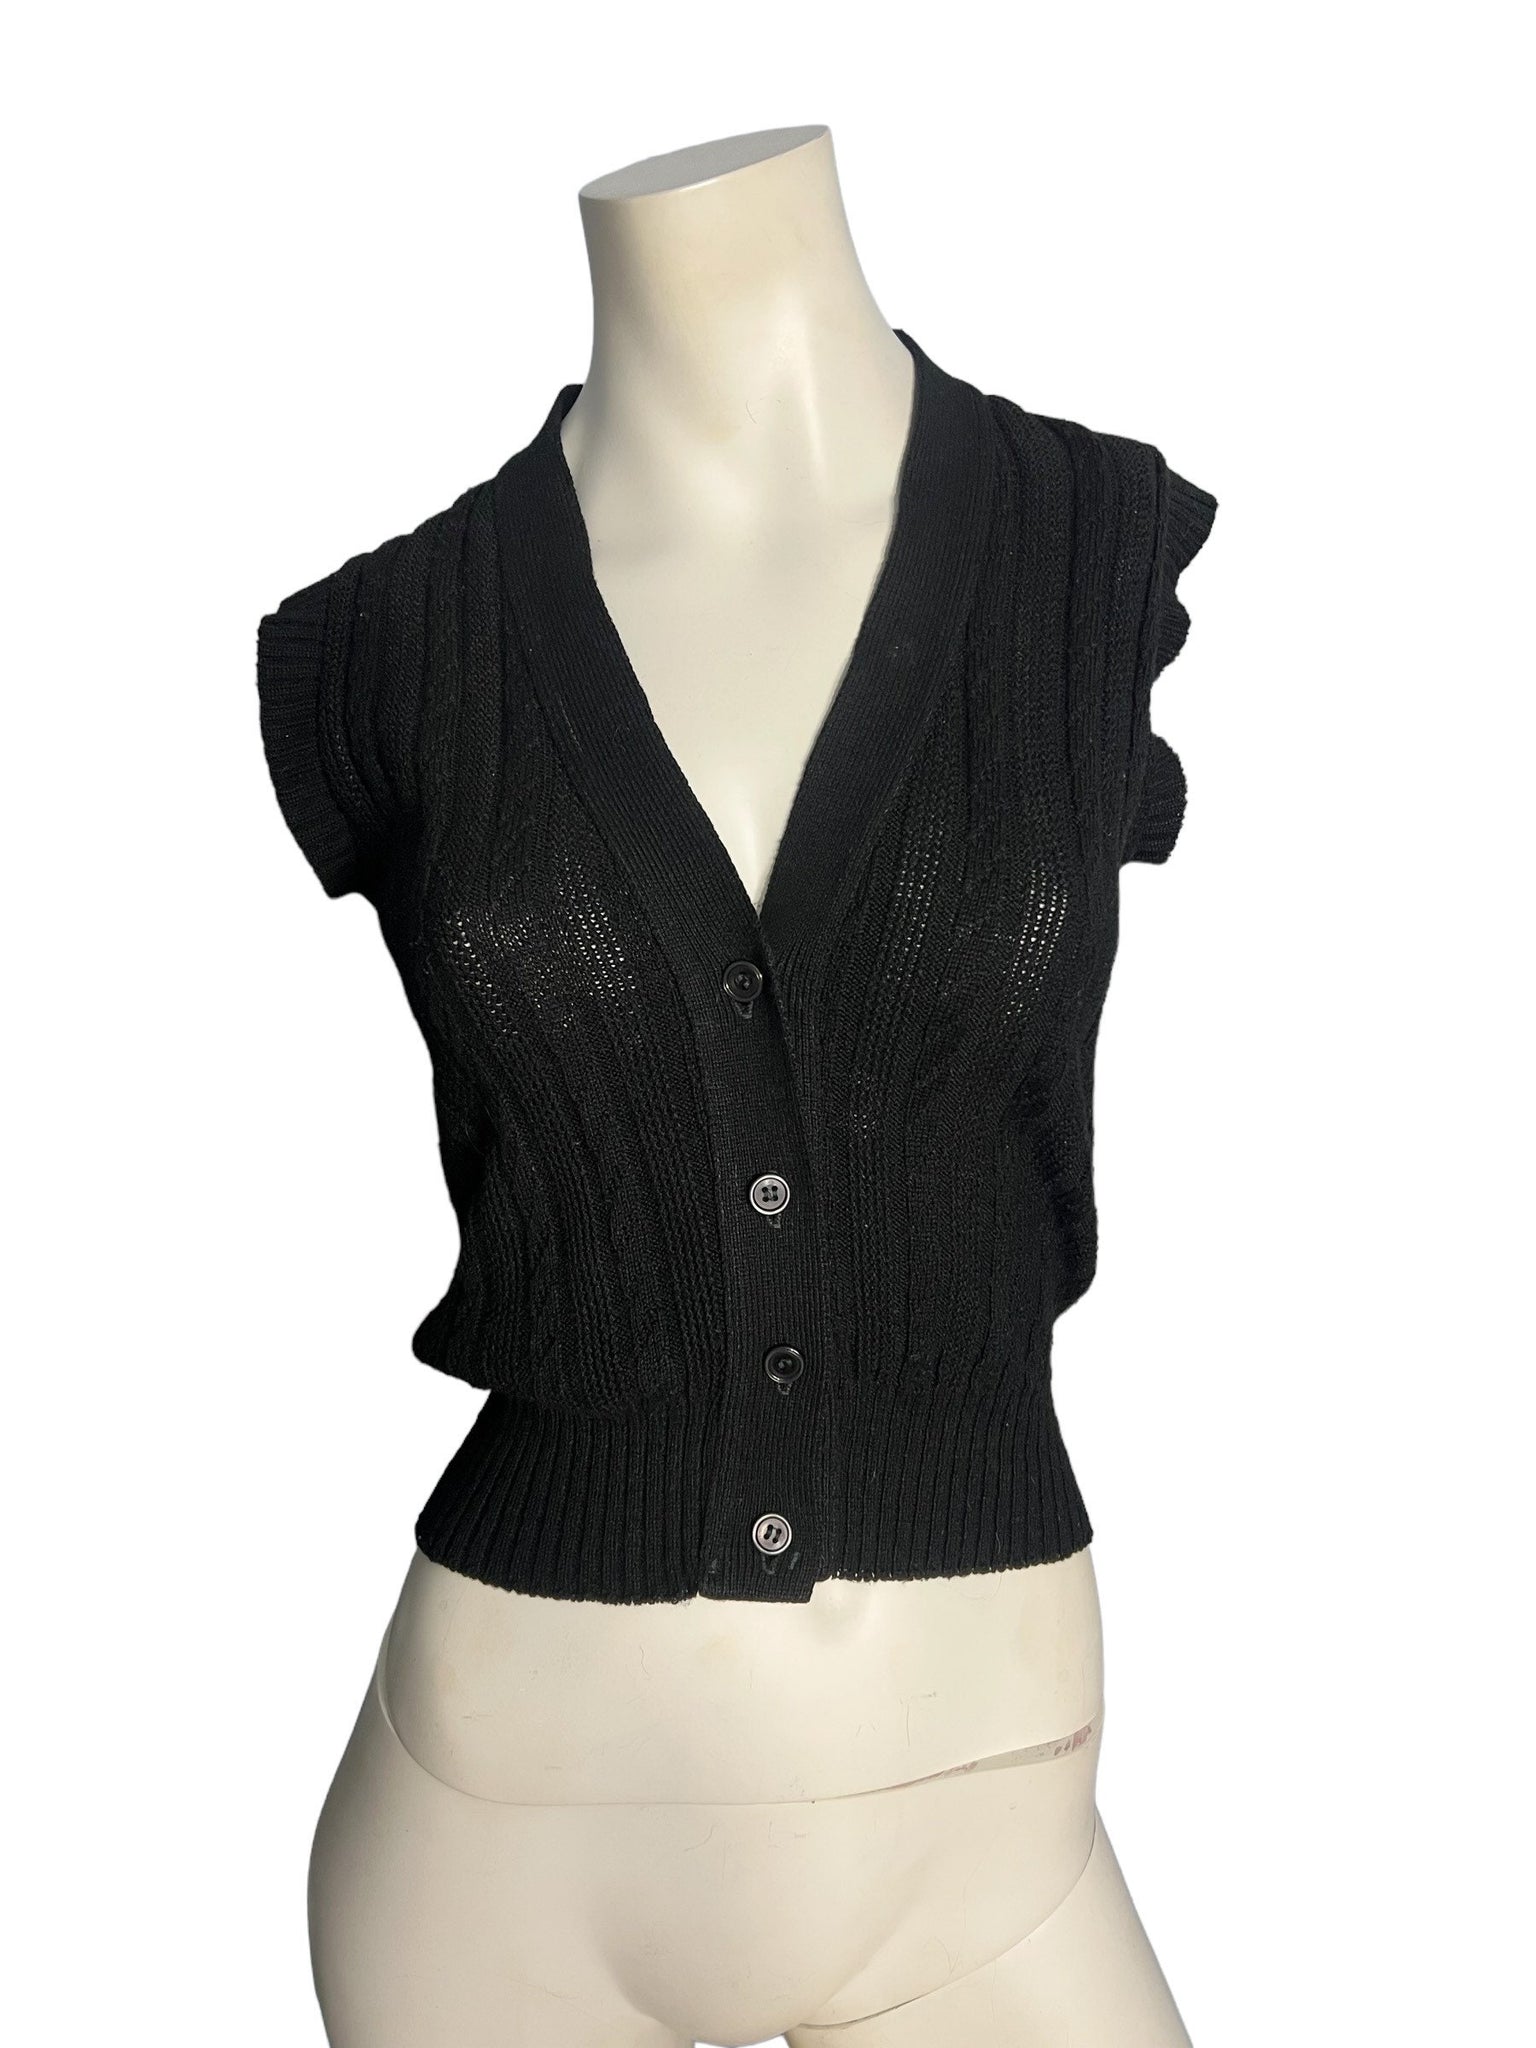 Vintage 70's black sweater vest top M